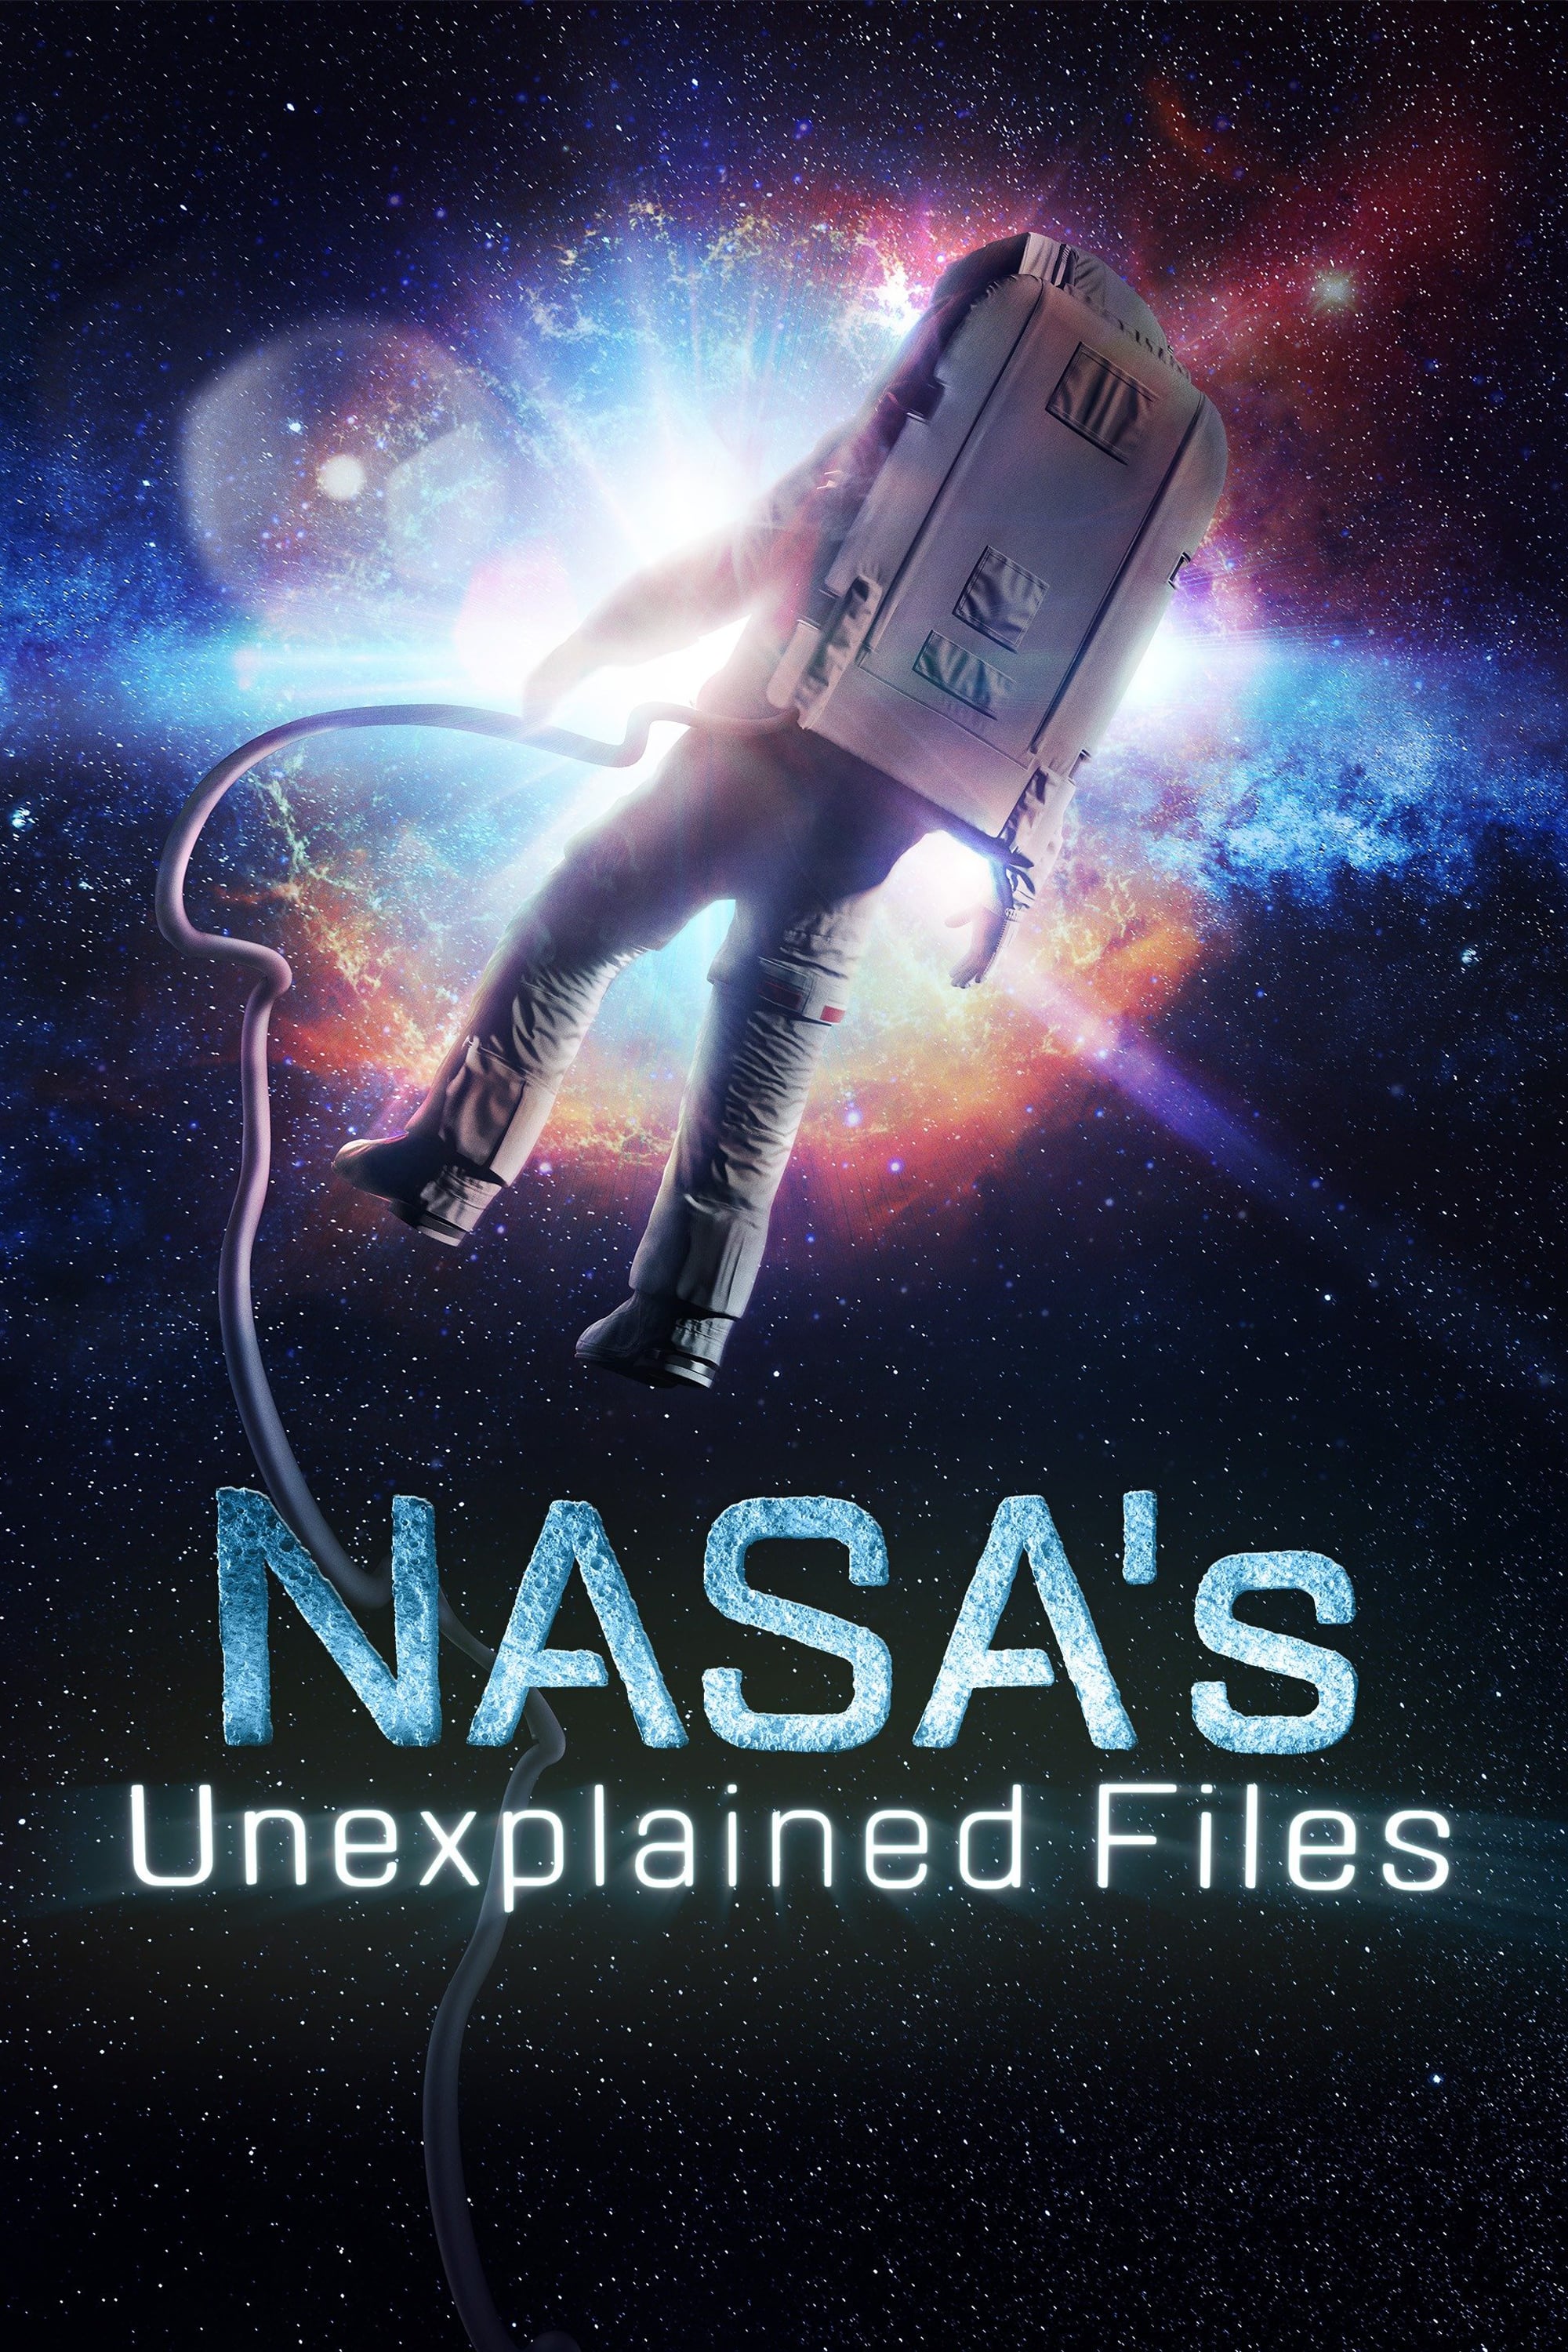 NASA archivos desclasificados